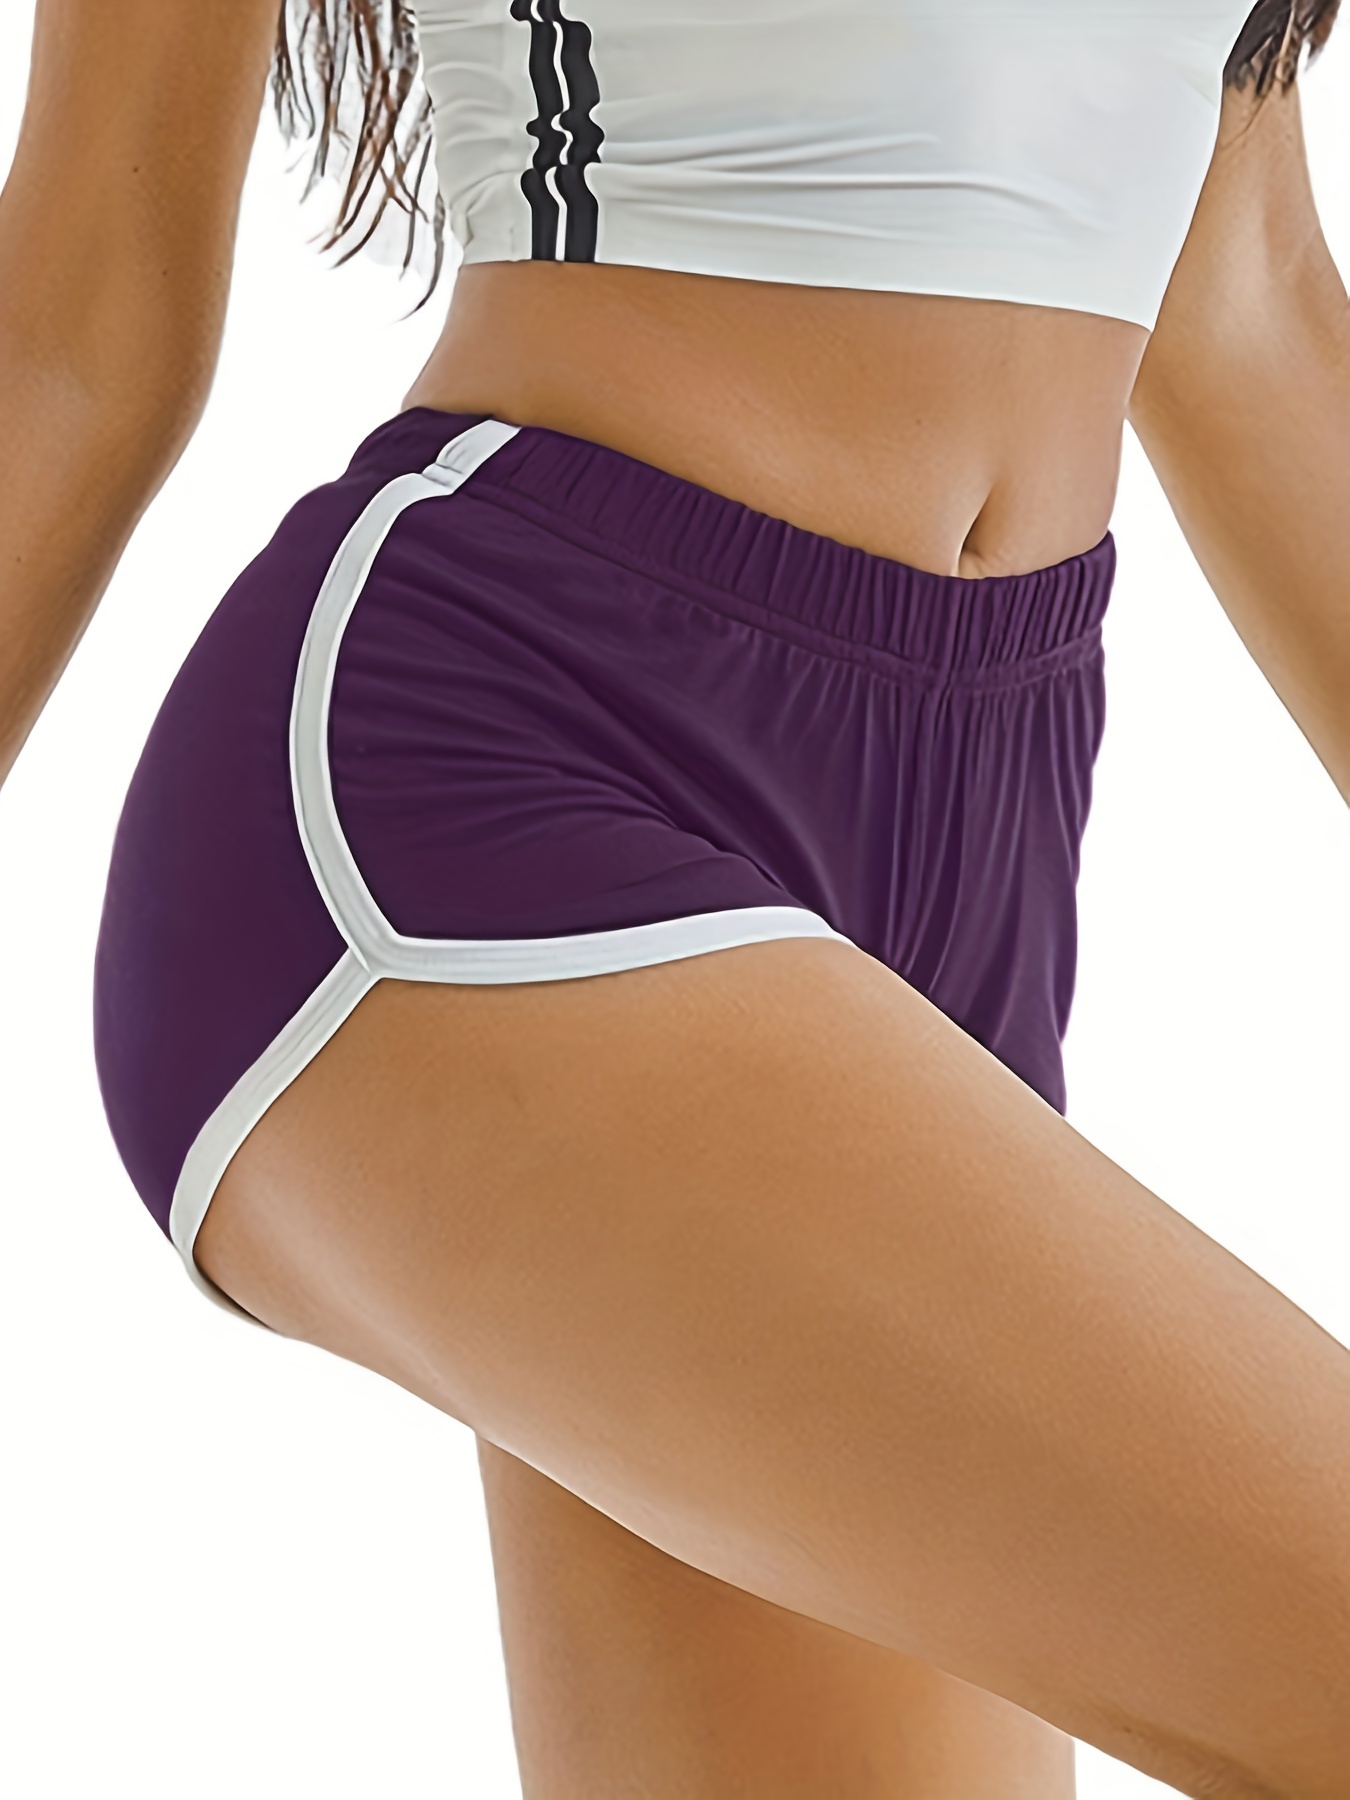 Women's Sports Shorts Gym Running Leggings Casual Hot Pants